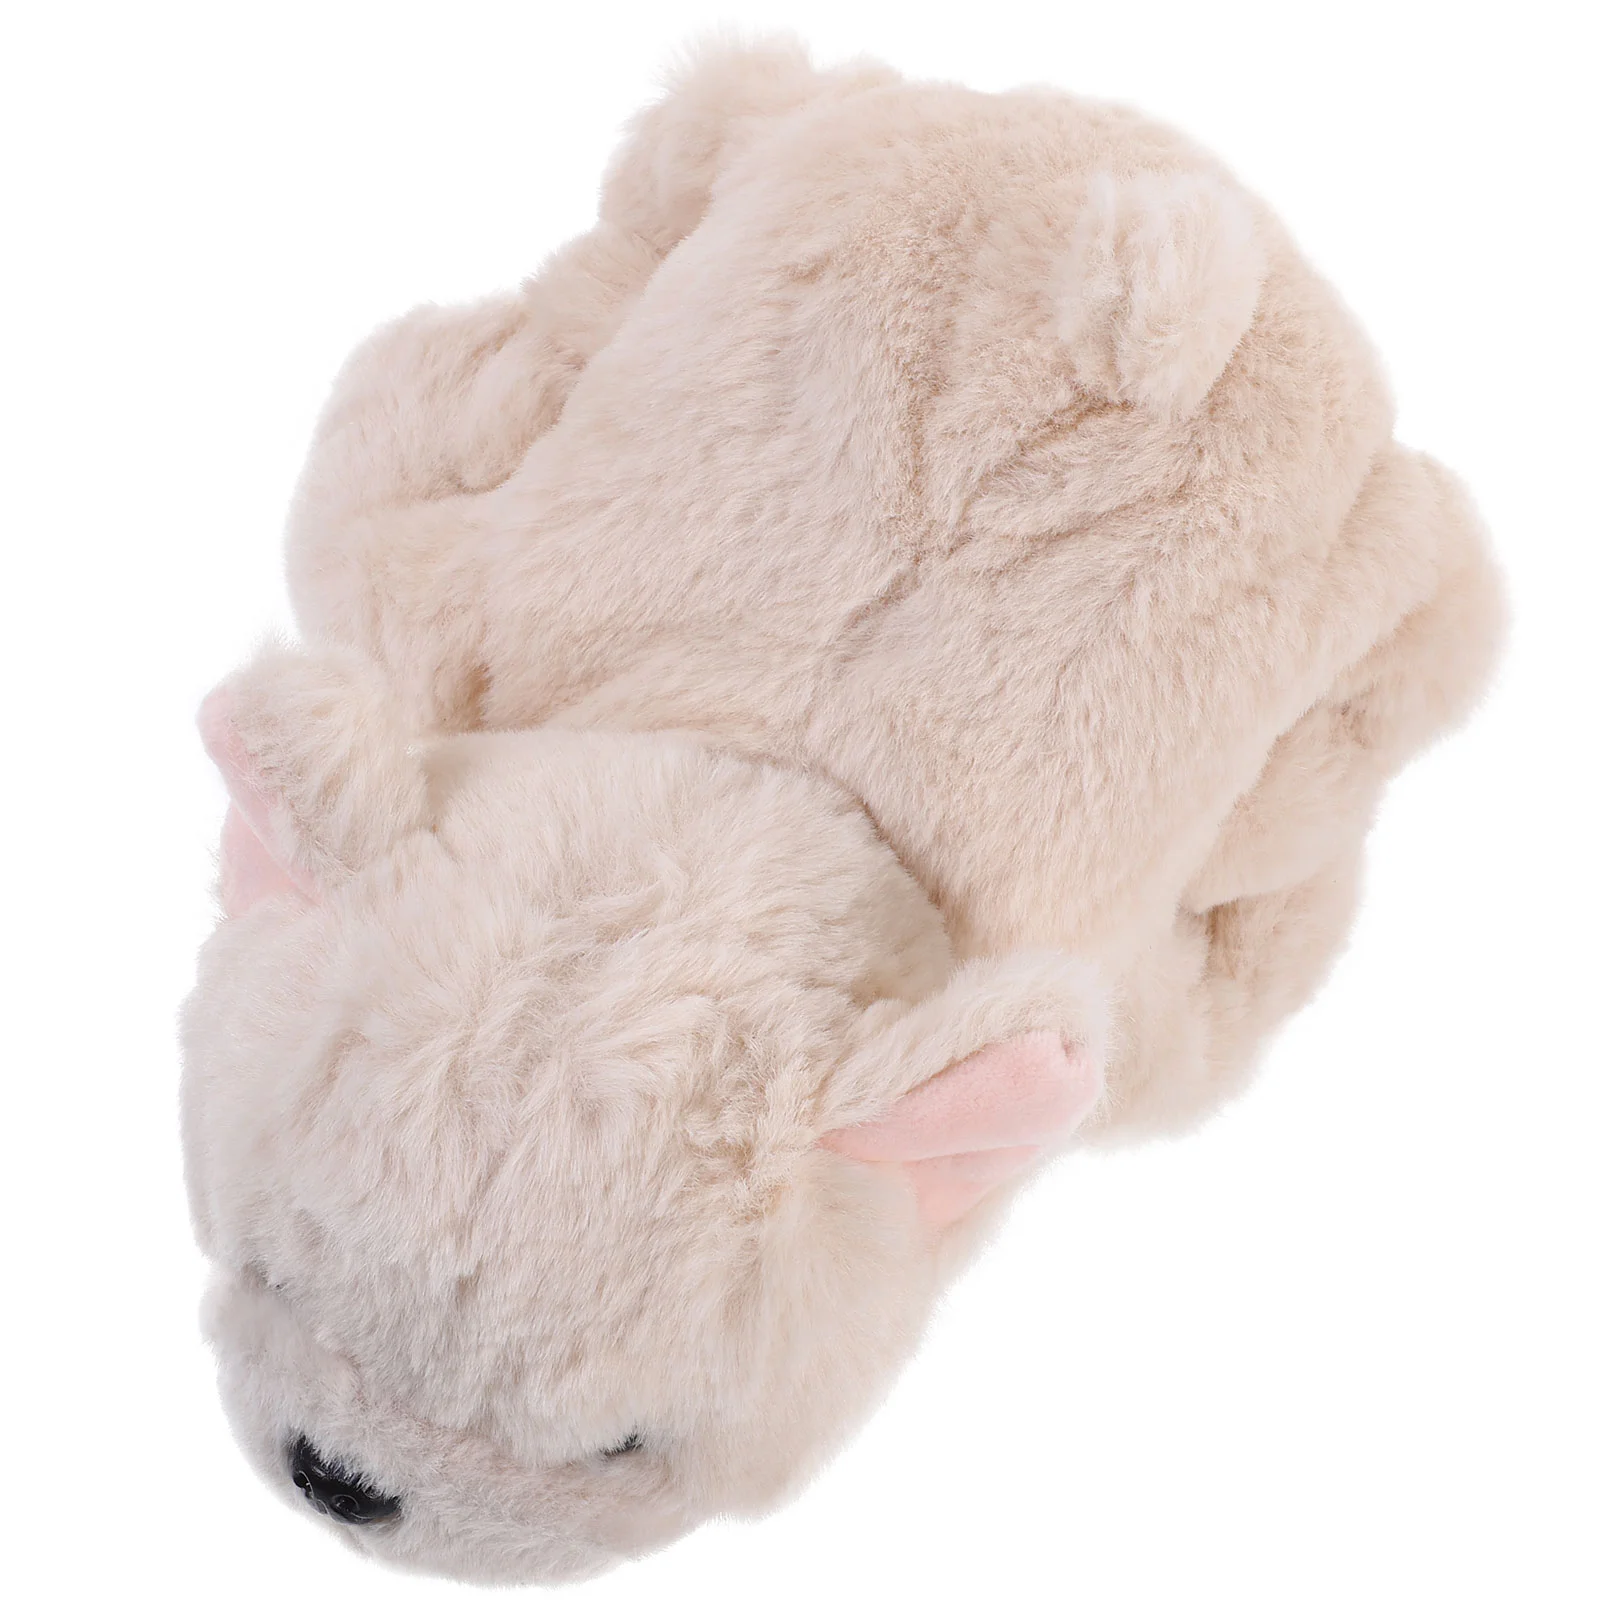 Stuffed Animal Hugger Slap Bracelet Stuffed Animal Toy Party Gift Party Decor цена и фото